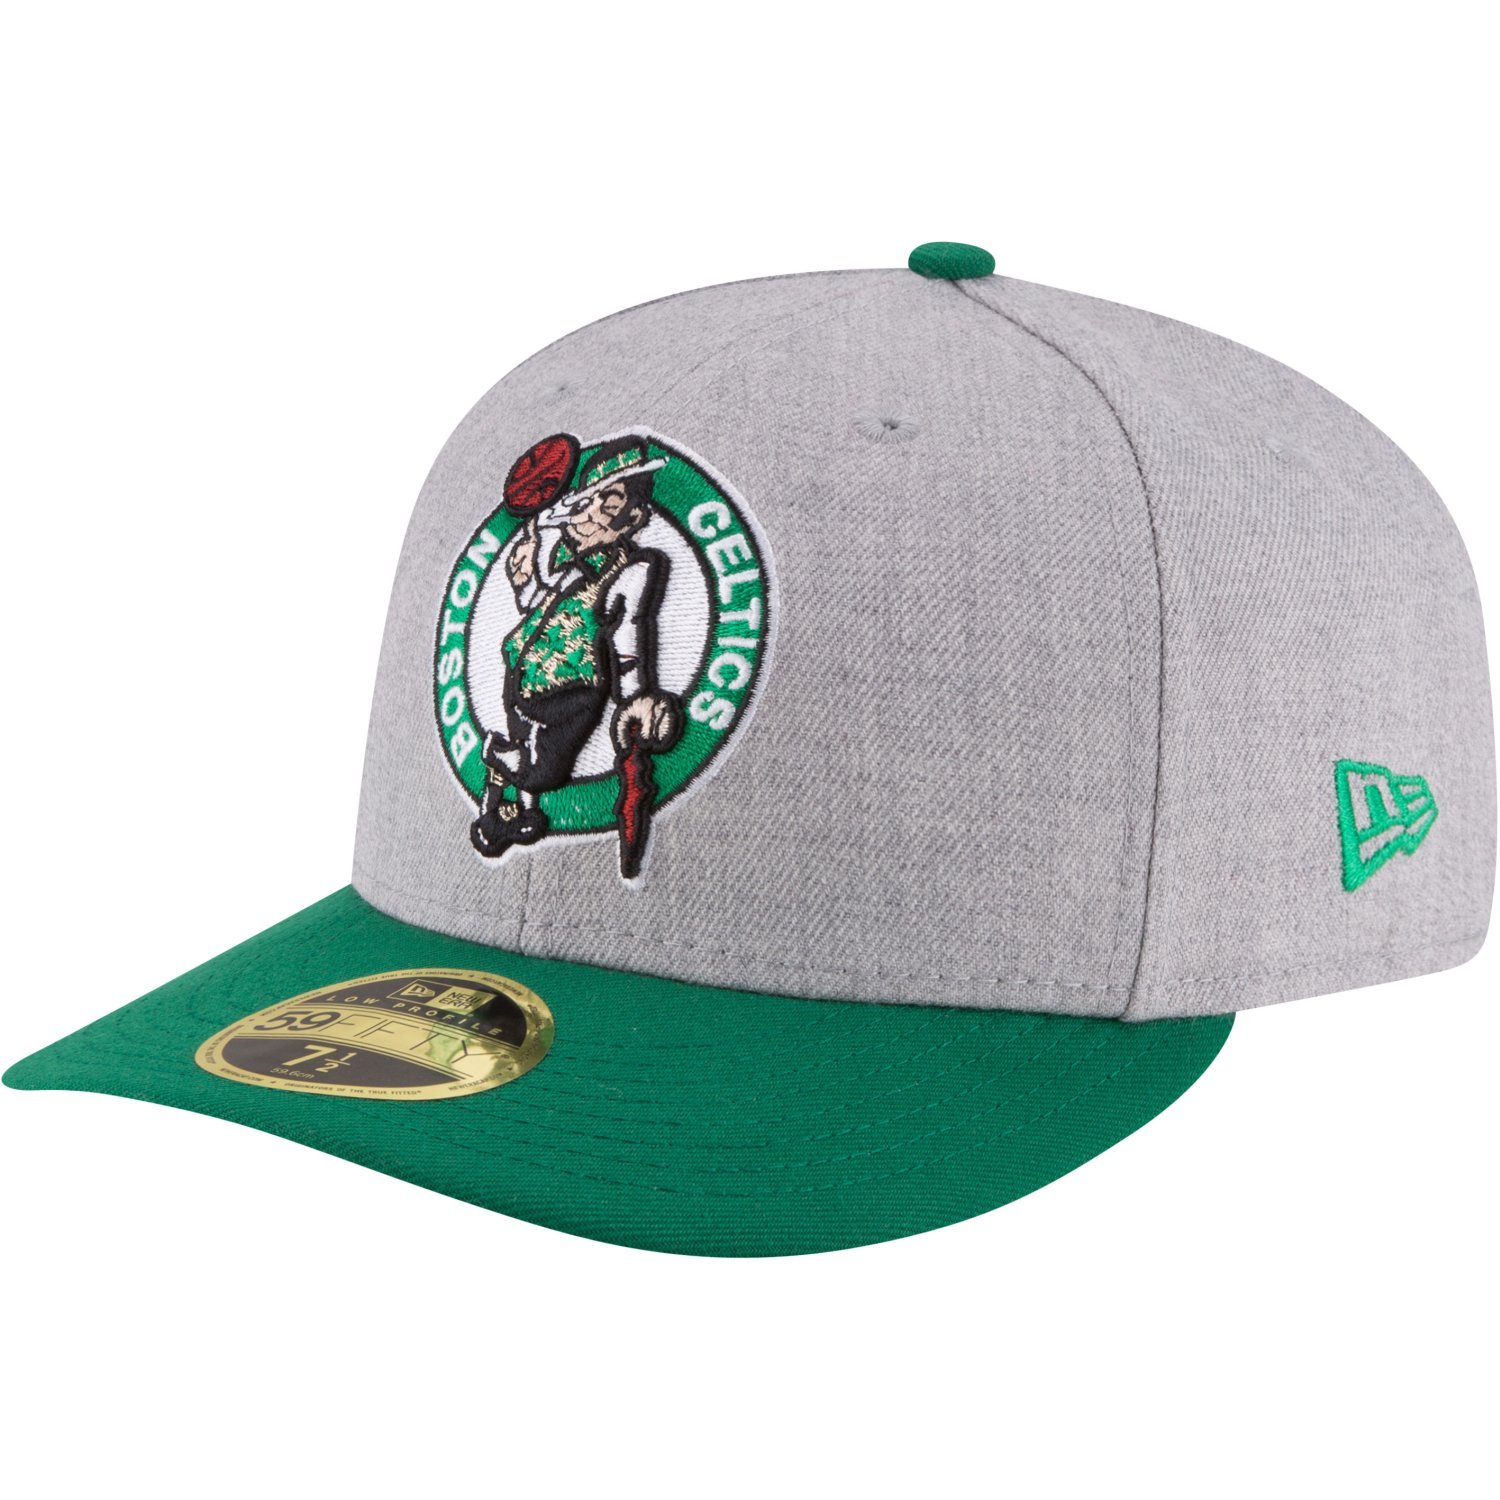 Buy New Era 59Fifty Low Profile Cap - NBA Boston Celtics